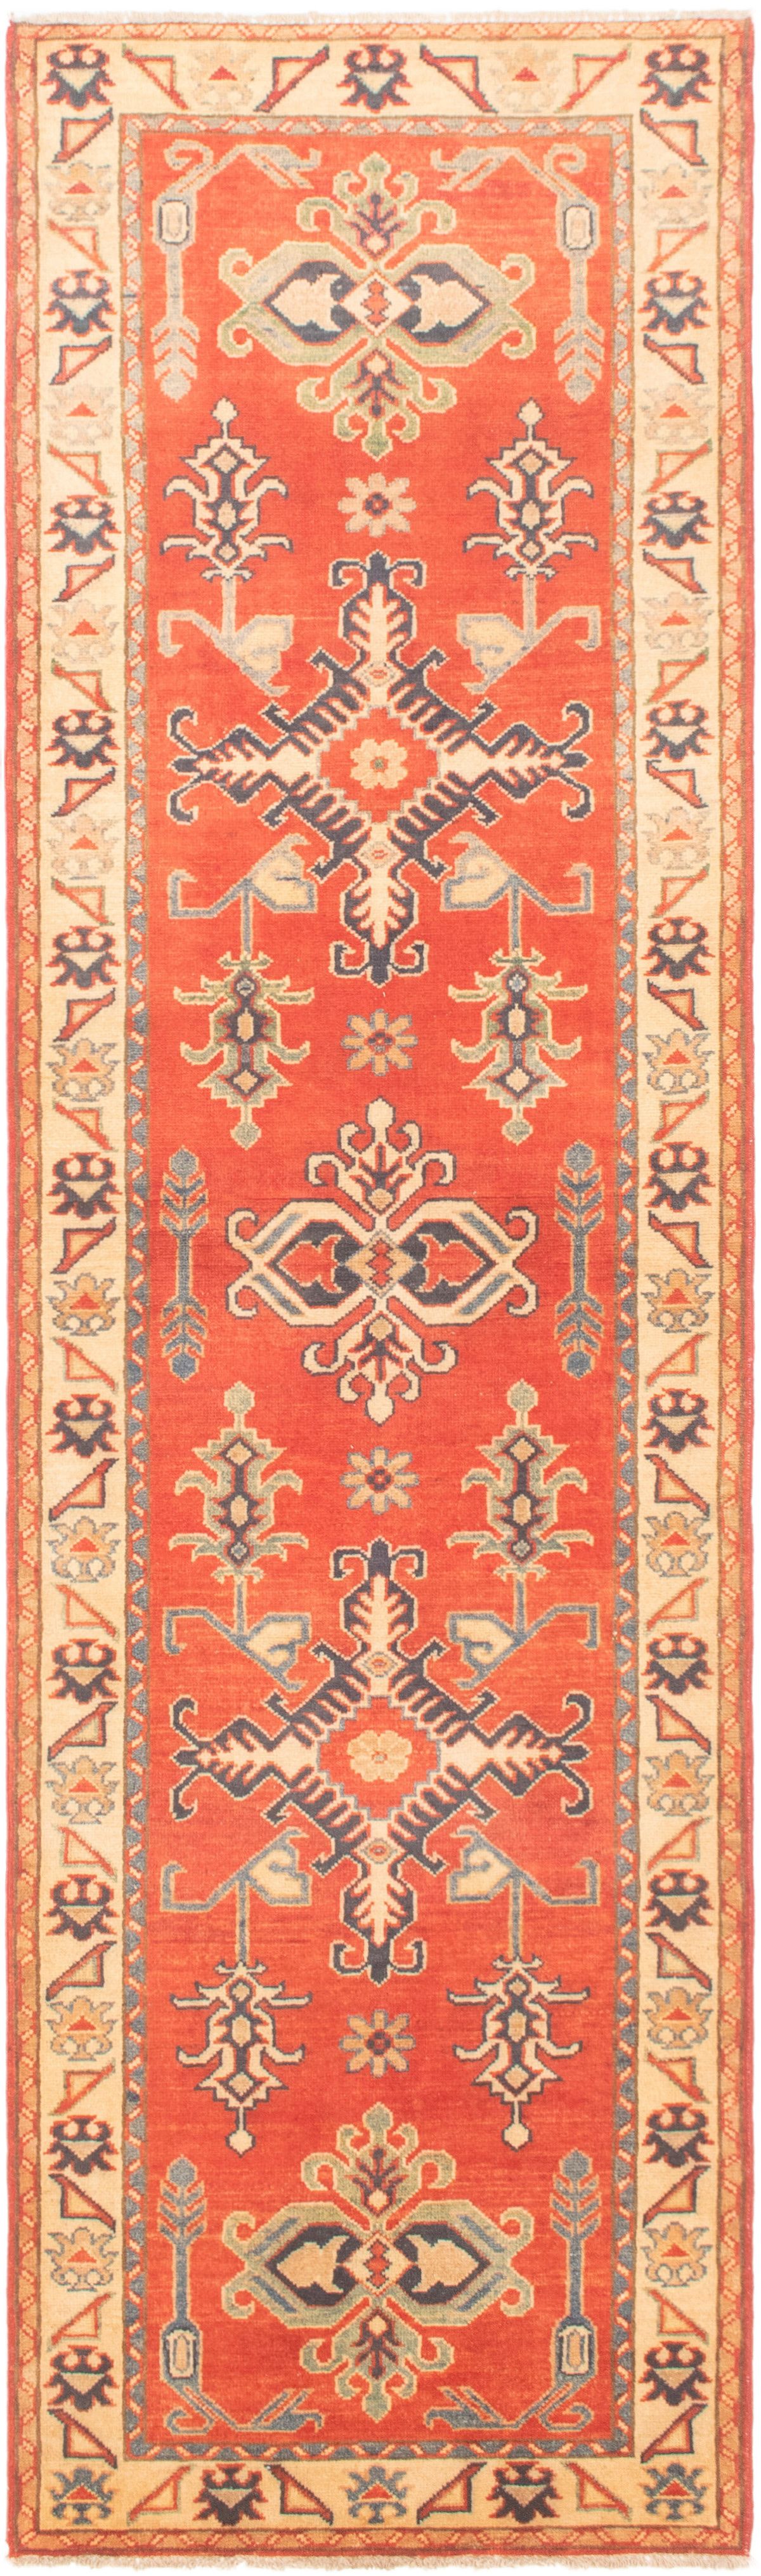 Hand-knotted Finest Gazni Dark Copper Wool Rug 2'8" x 9'8"  Size: 2'8" x 9'8"  